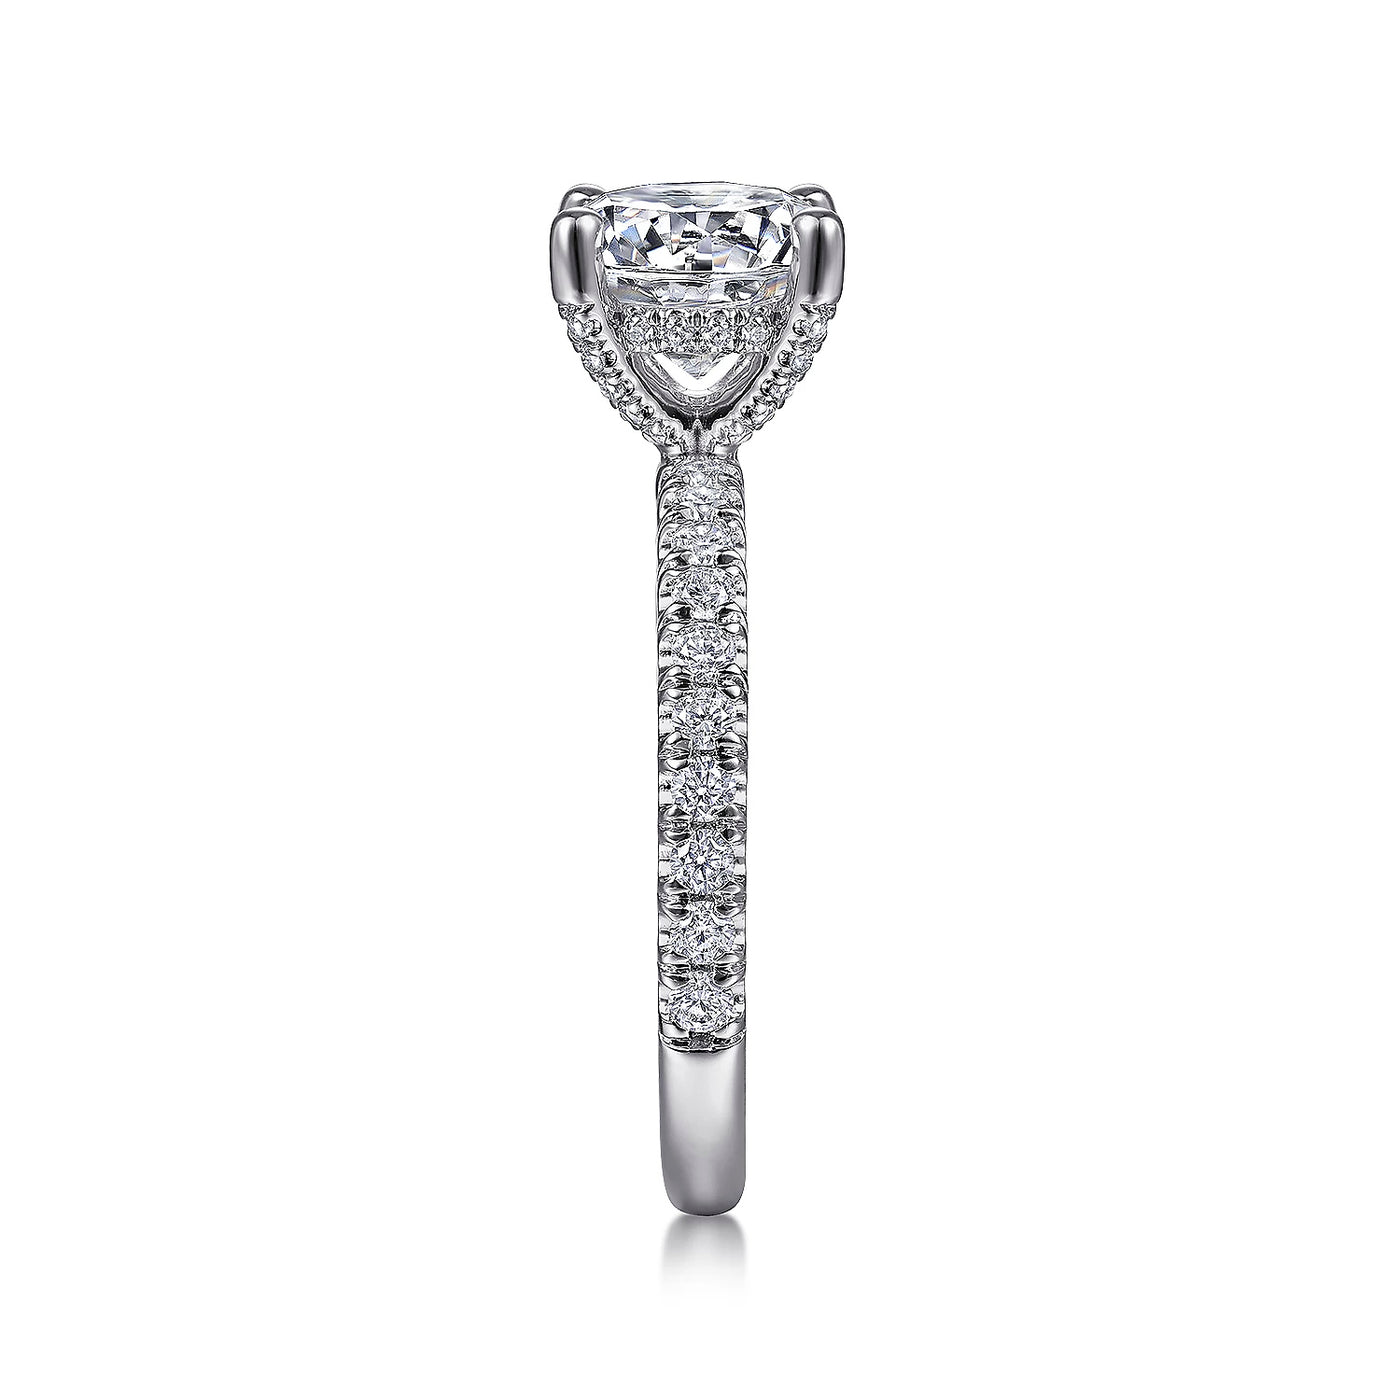 Gabriel & Co. 14k White Gold Round Solitaire Diamond Semi-Mount Engagement Ring – ER13904R8W44JJ.CSCZ